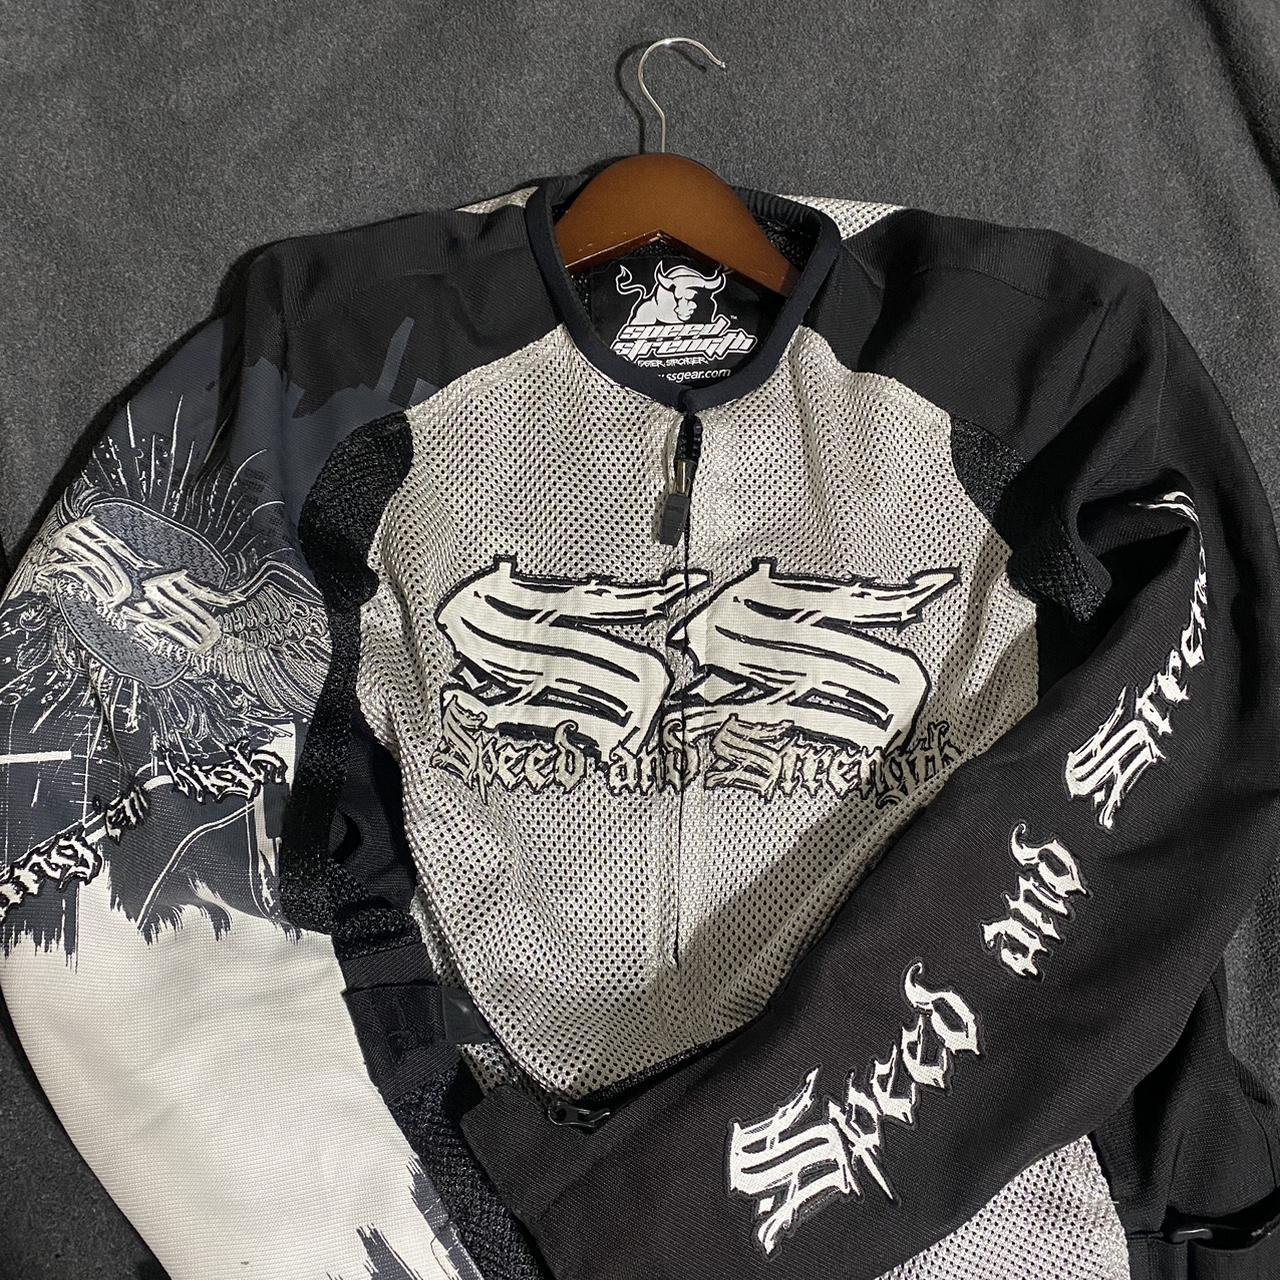 Speed & Strength Biker jacket / Riding jacket -Fits... - Depop